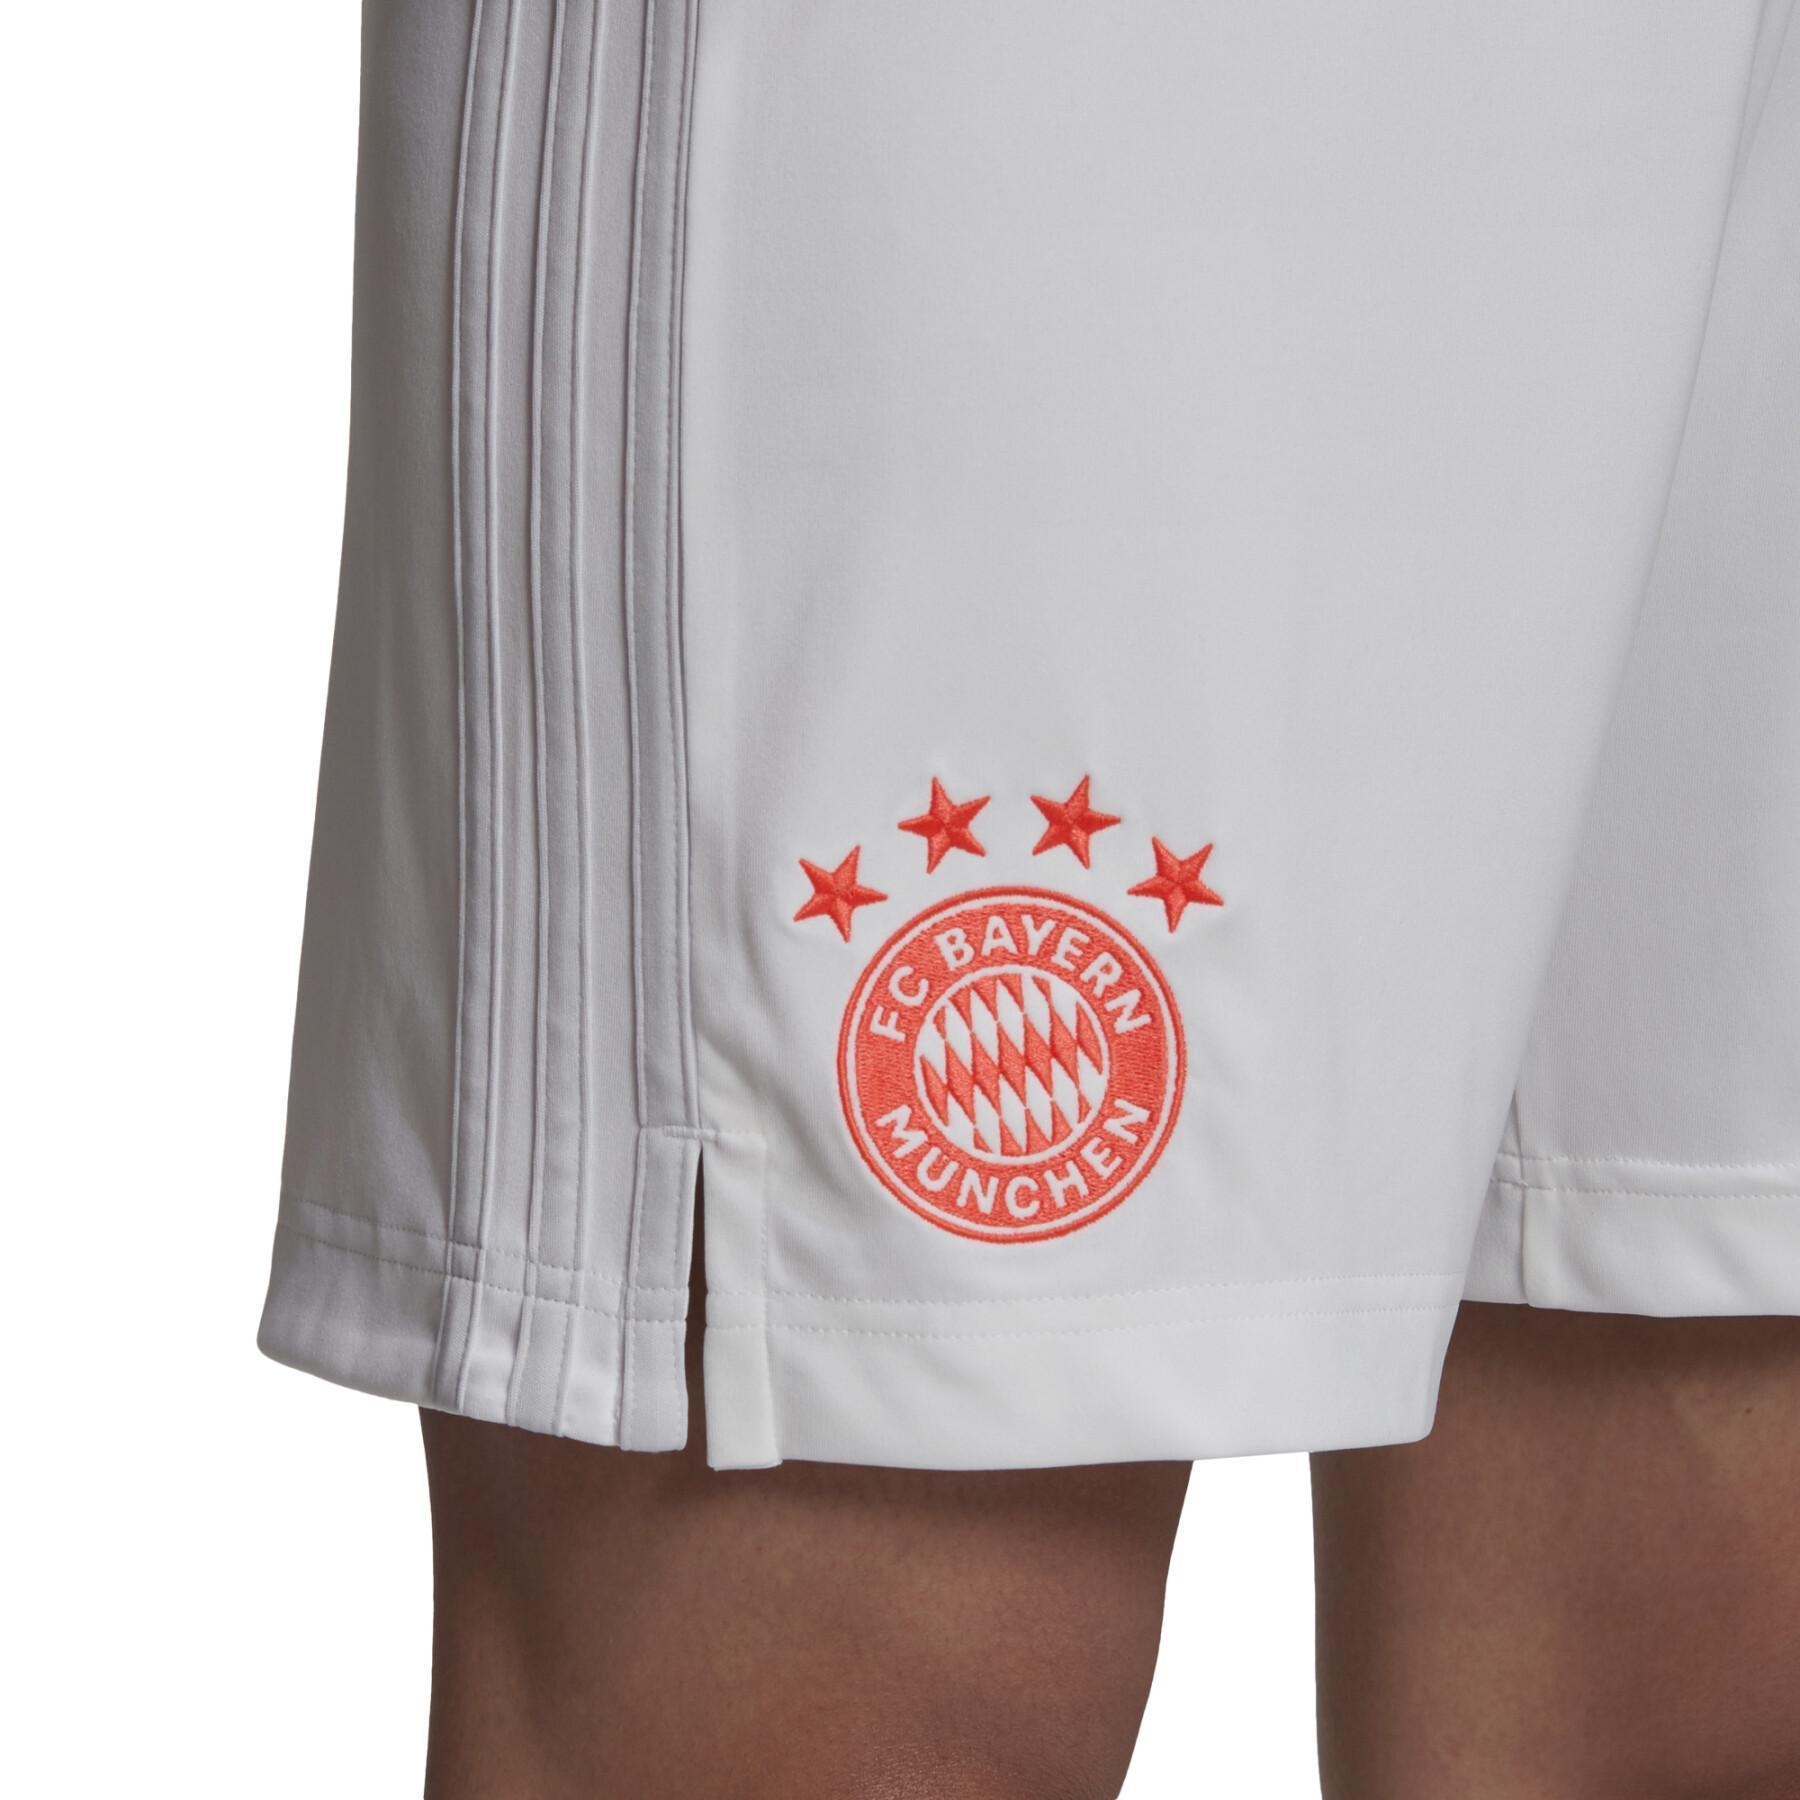 pantaloncini esterni del Bayern 2020/21